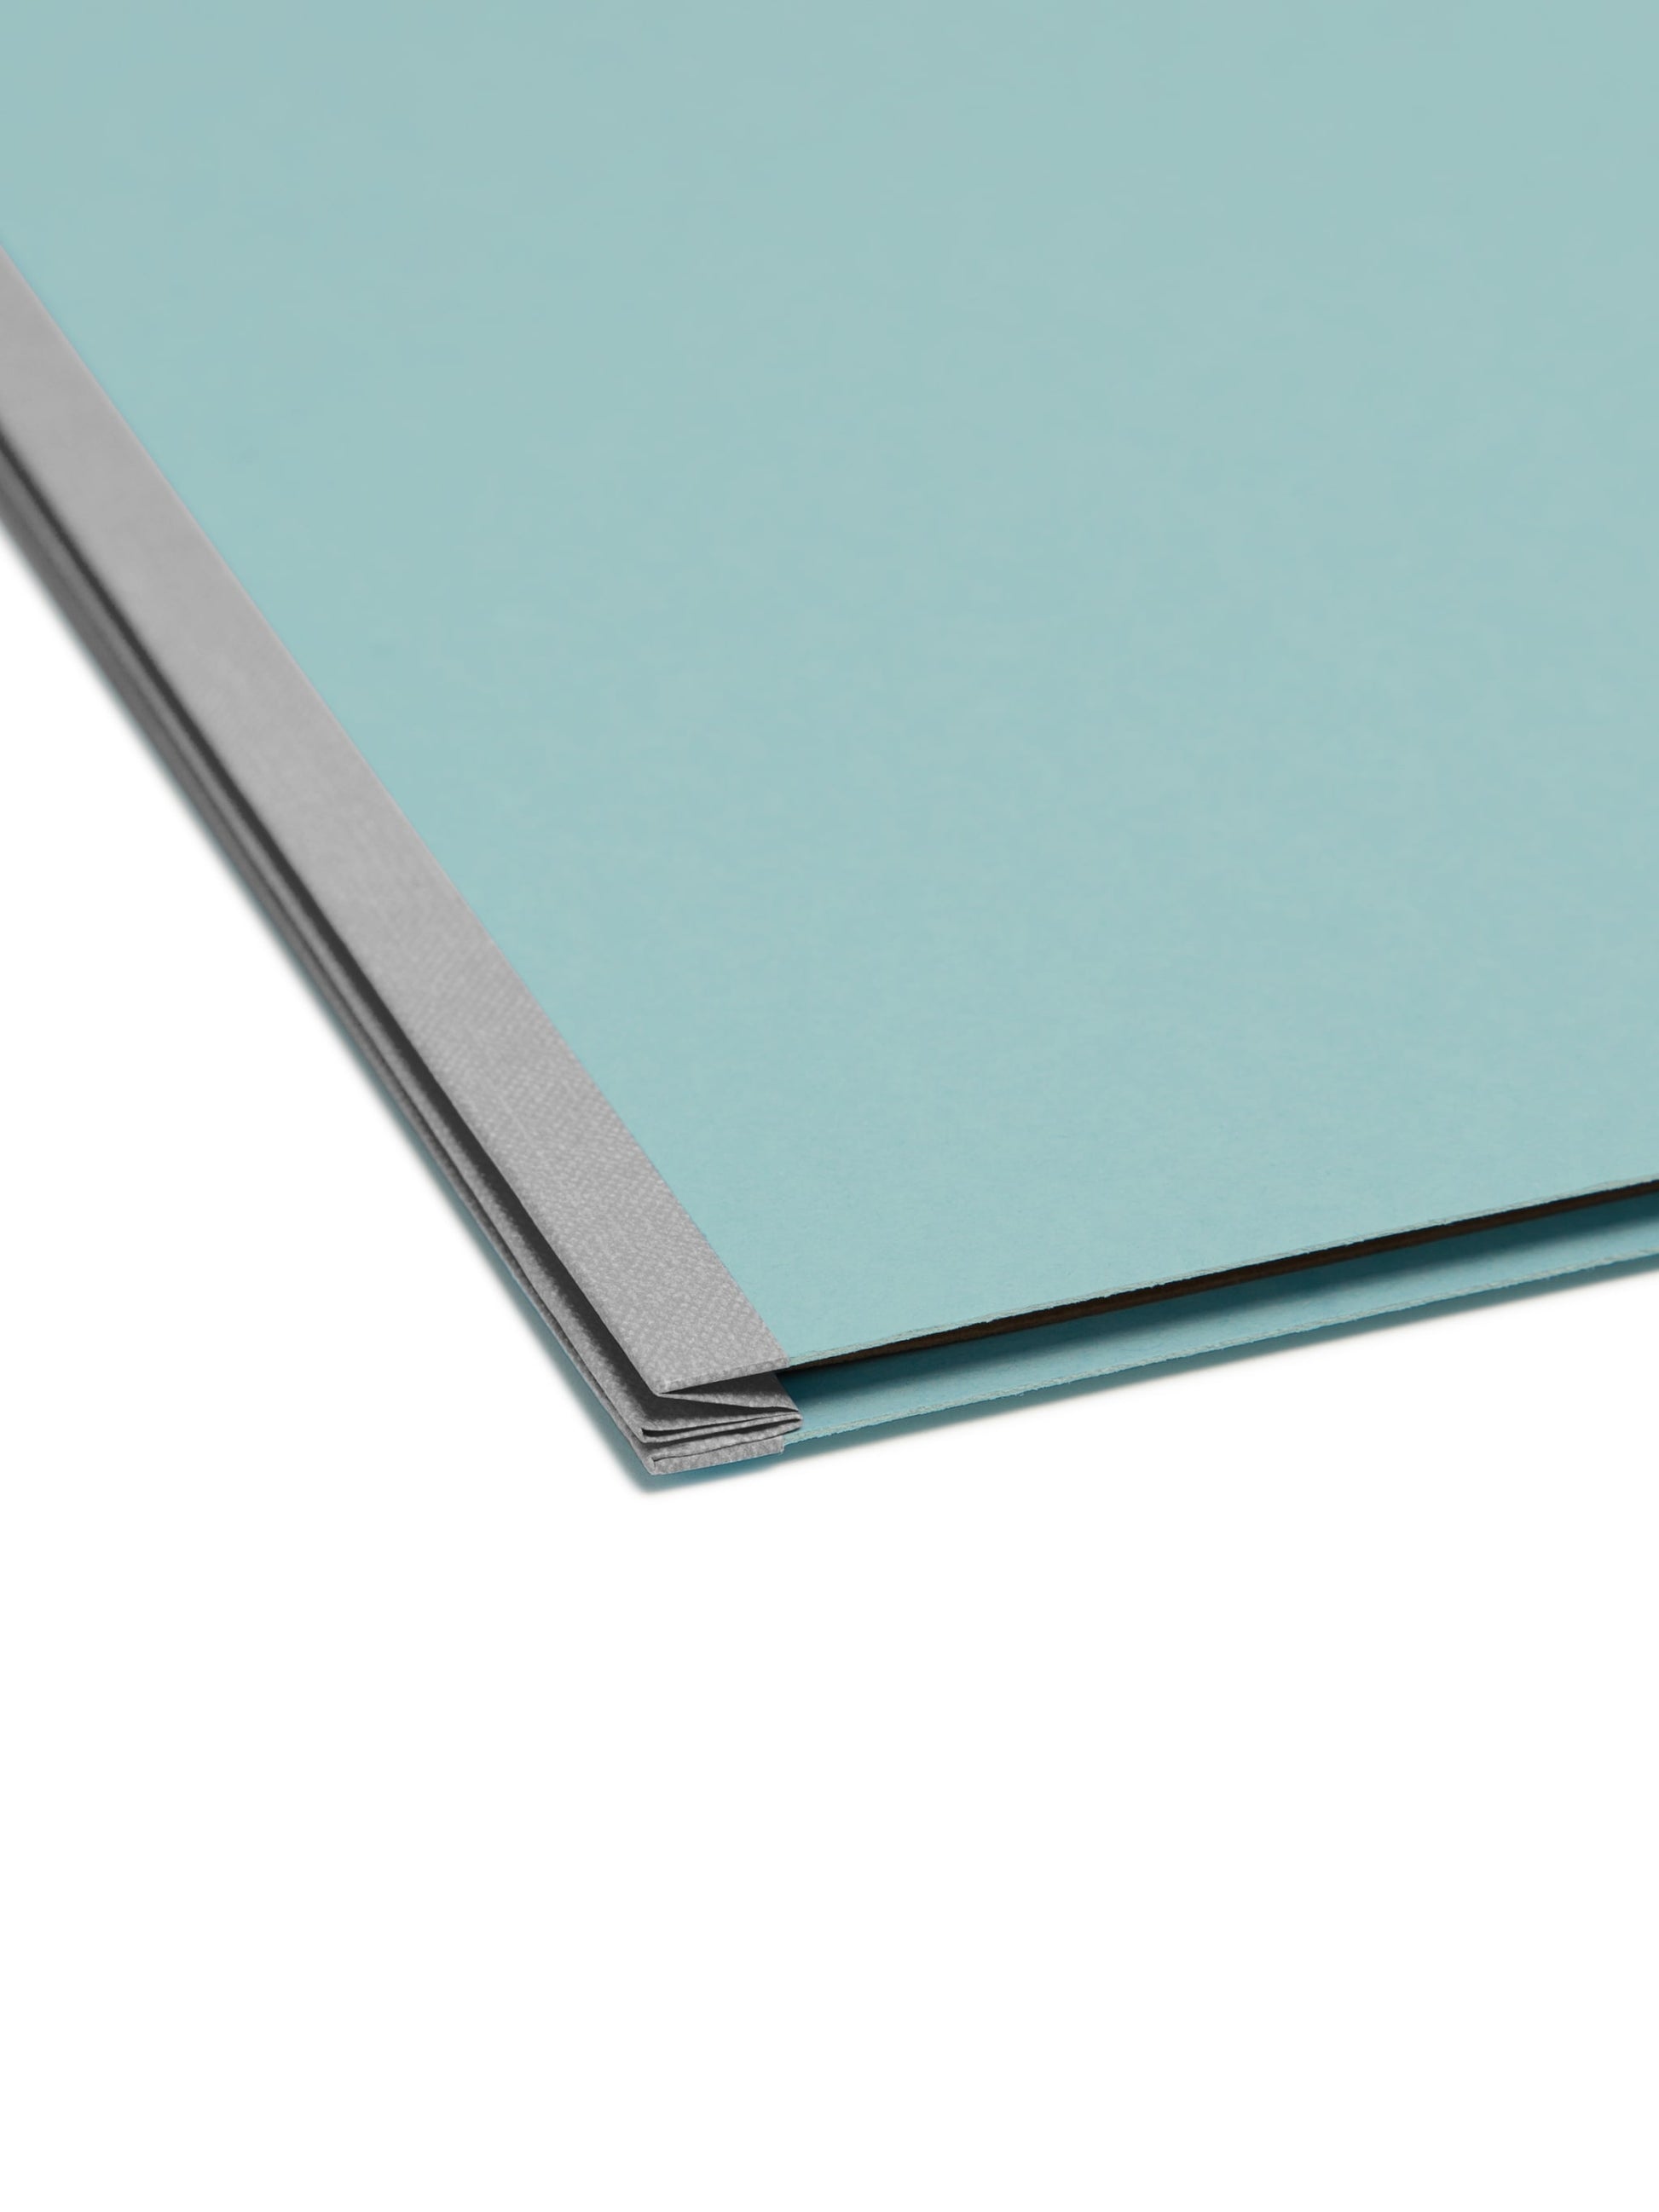 SafeSHIELD® Pressboard Classification File Folders, 2 Dividers, 2 inch Expansion, 2/5-Cut Tab, Blue Color, Letter Size, Set of 0, 30086486140301